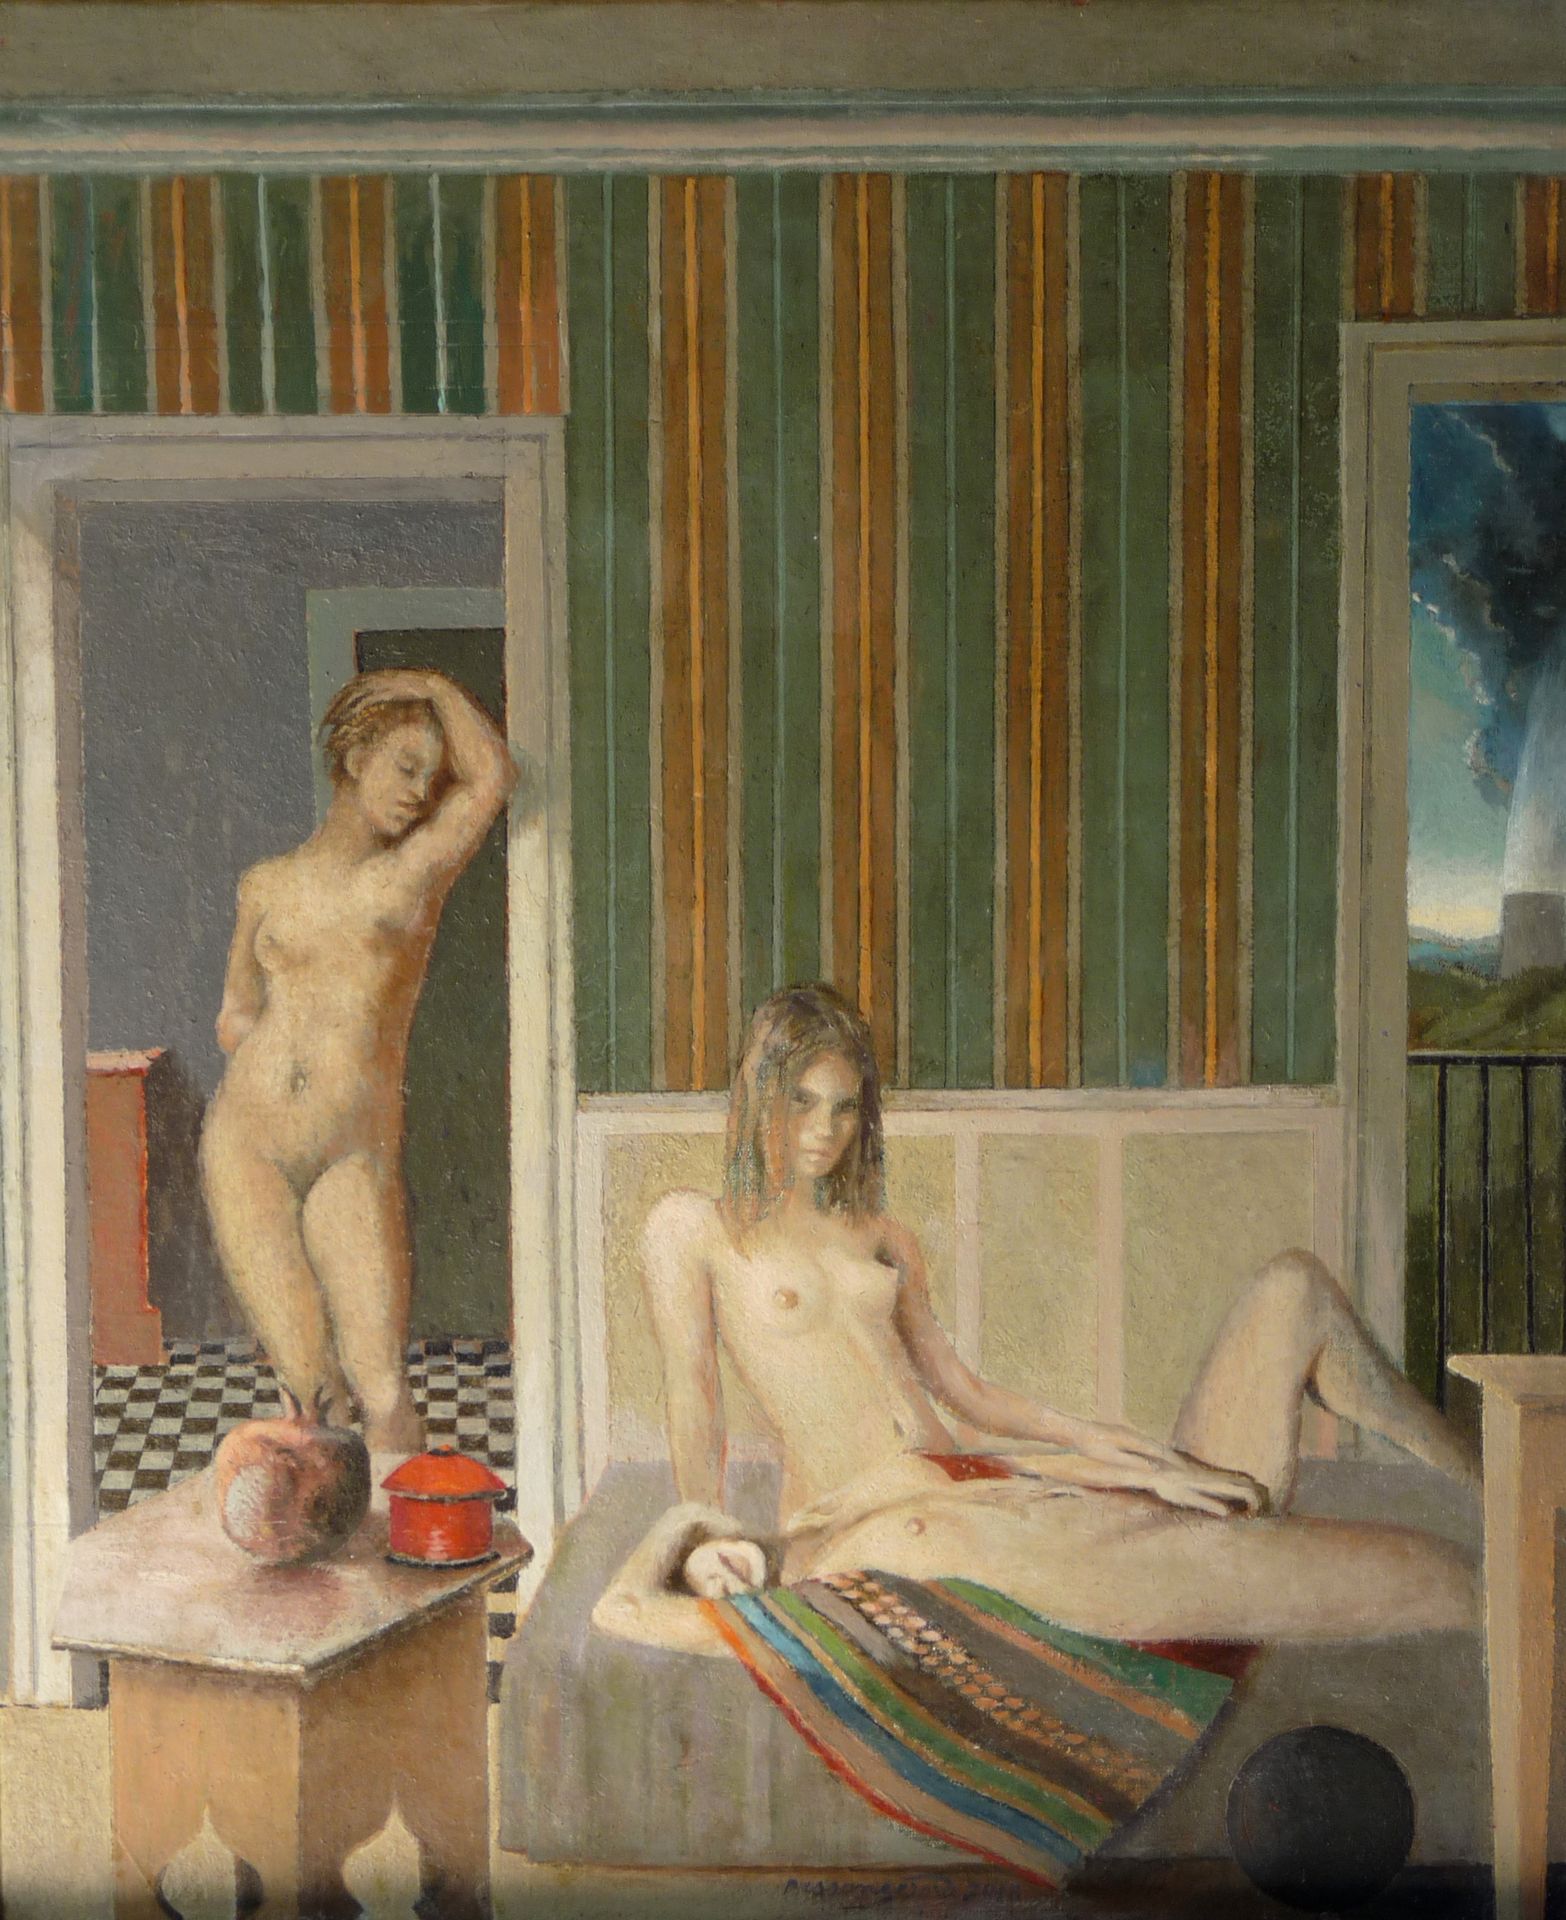 Null 让-克劳德-贝松-吉拉尔 (1938-2021)

无题2, 2018

布面油画，中央下方有签名和日期

46 x 38 cm